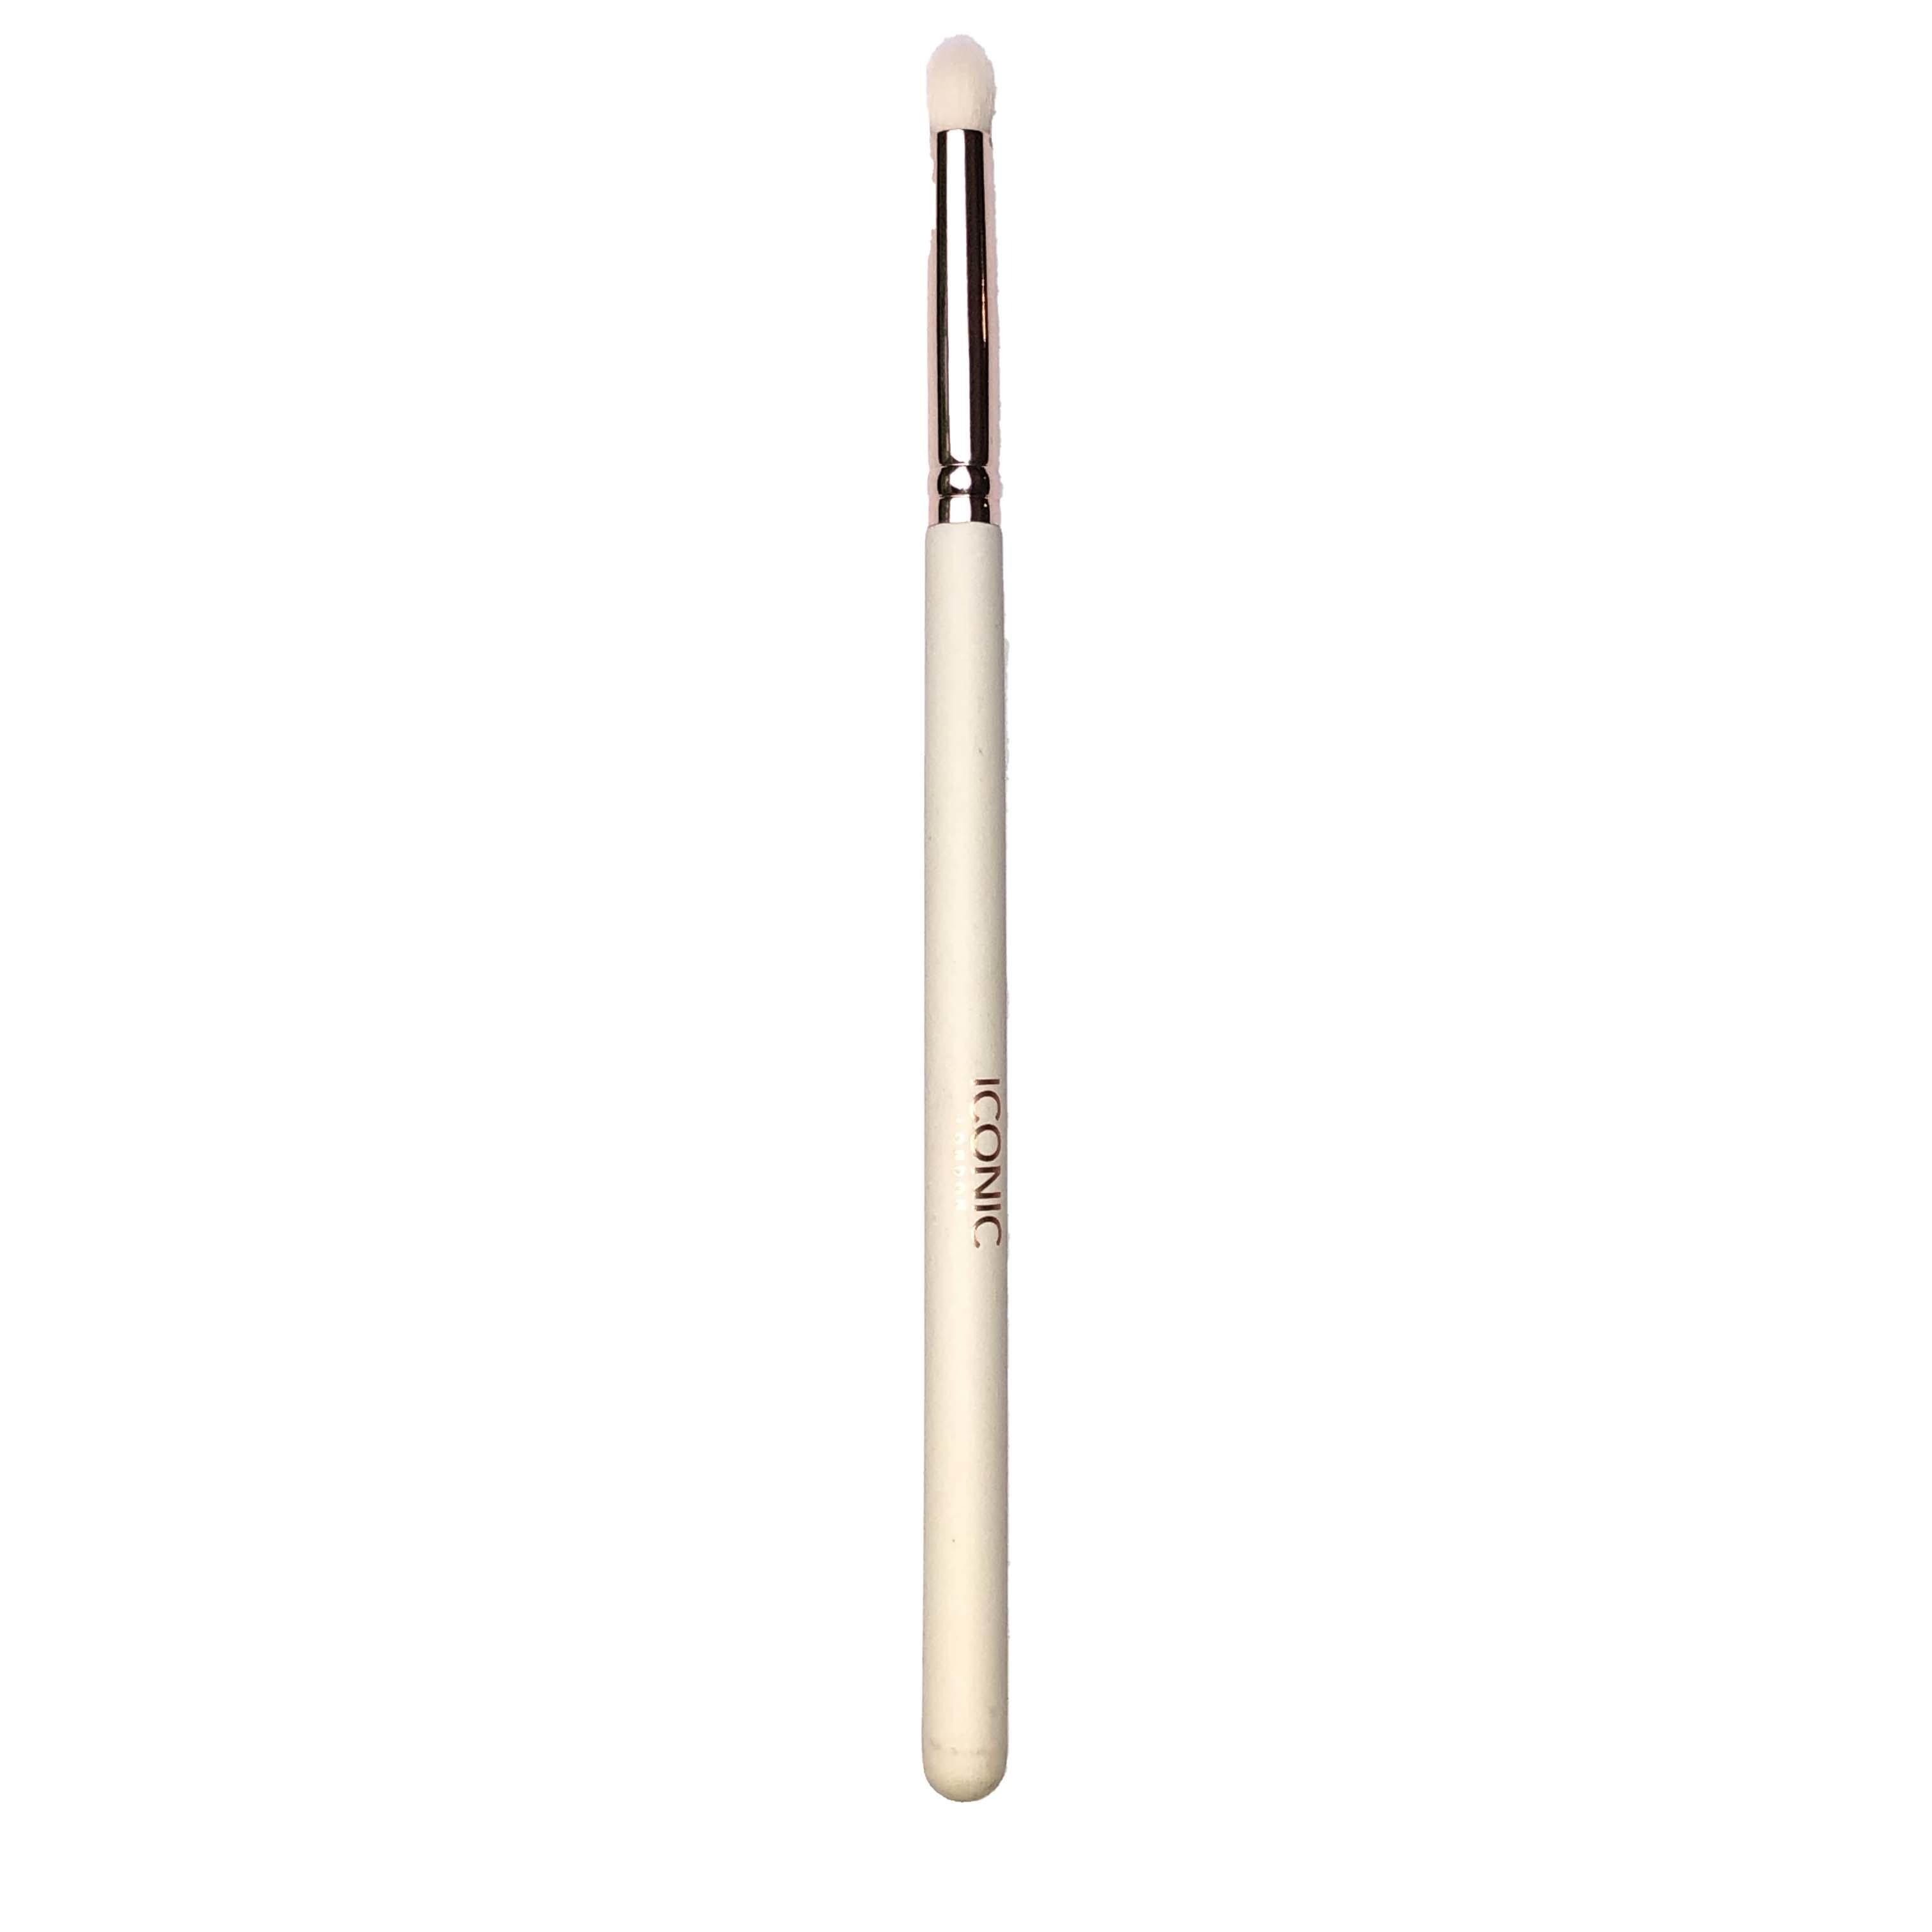 ICONIC London Pencil Tip Eye Defining Brush